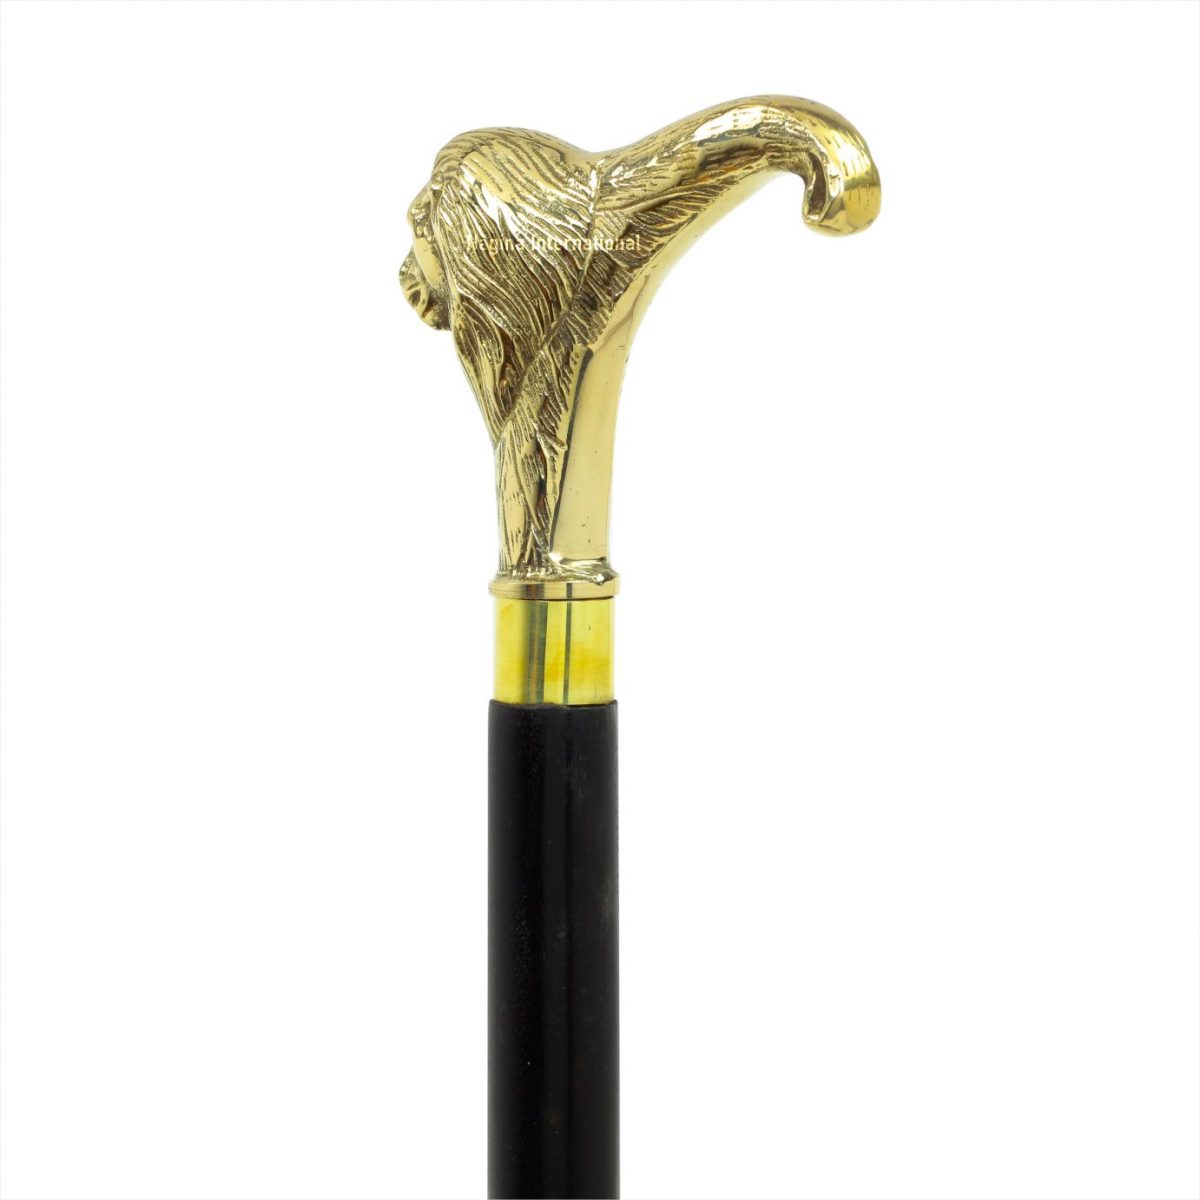 36″ Brass Walking Stick Solid Vintage Designer Lion Head Wooden Cane  Antique Style